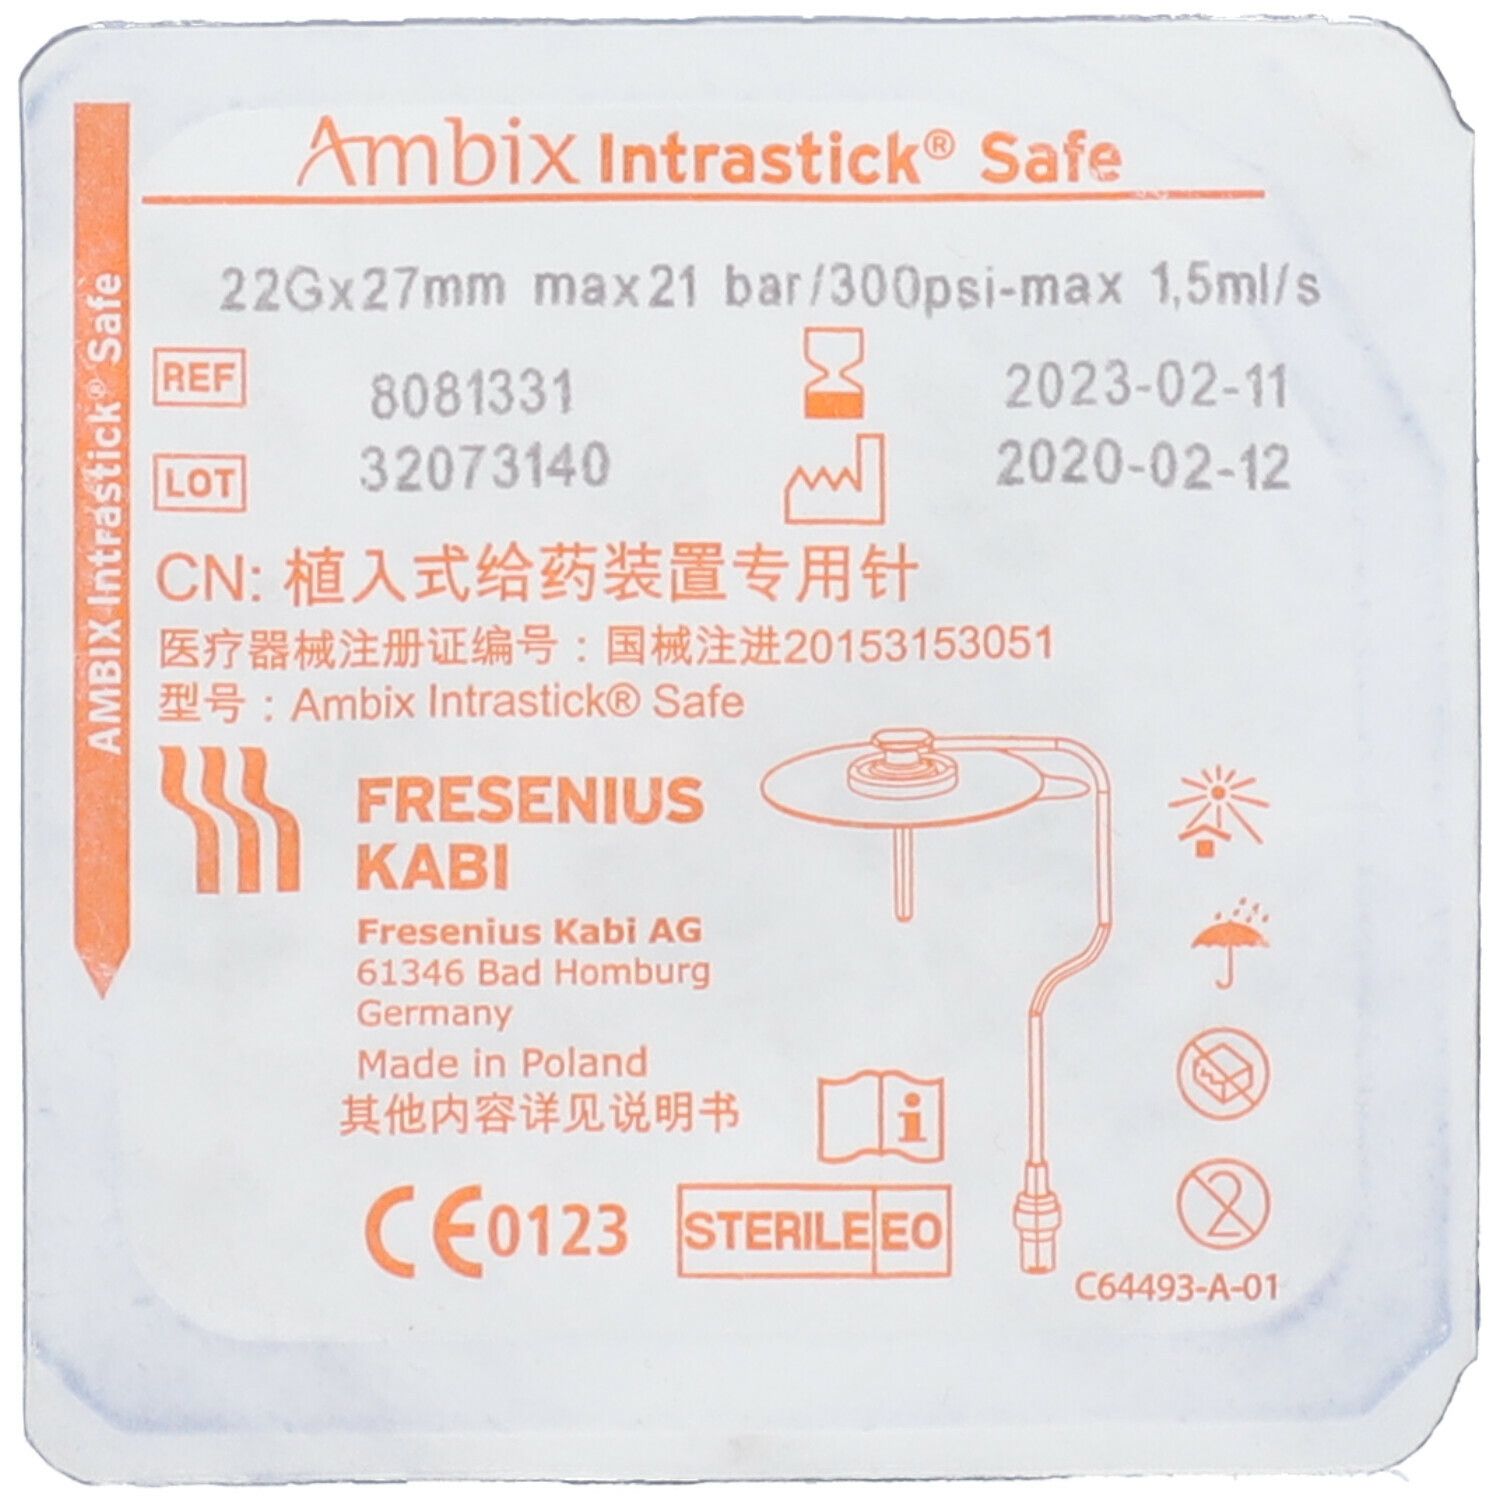 Ambix Intrastick® -System 22 G x 27 mm